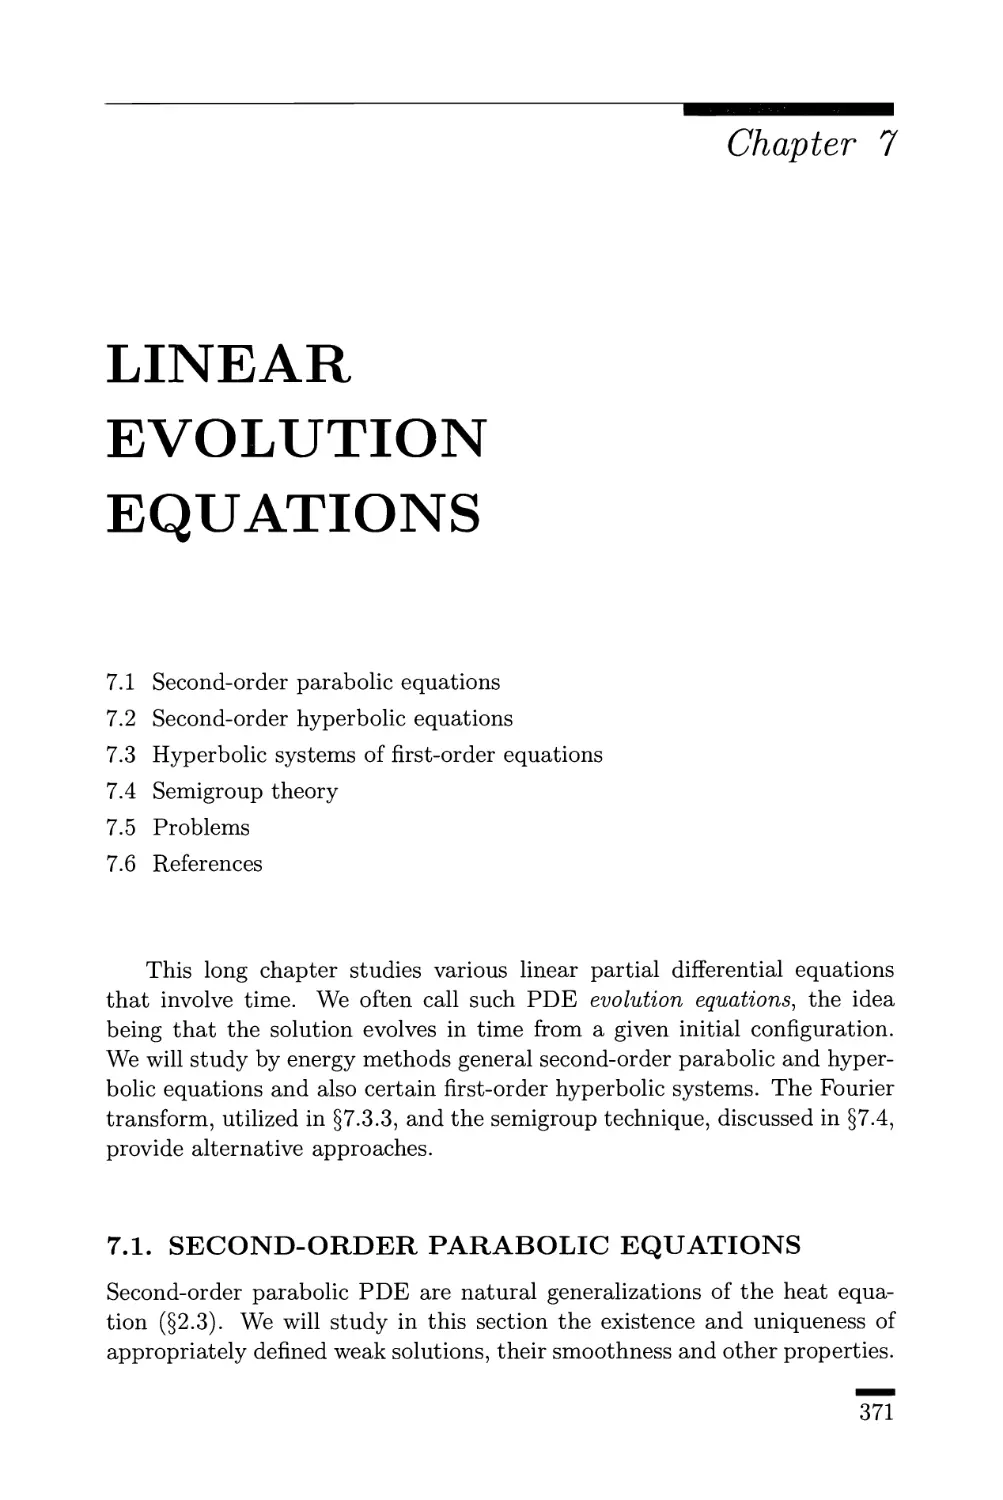 7. Linear Evolution Equations